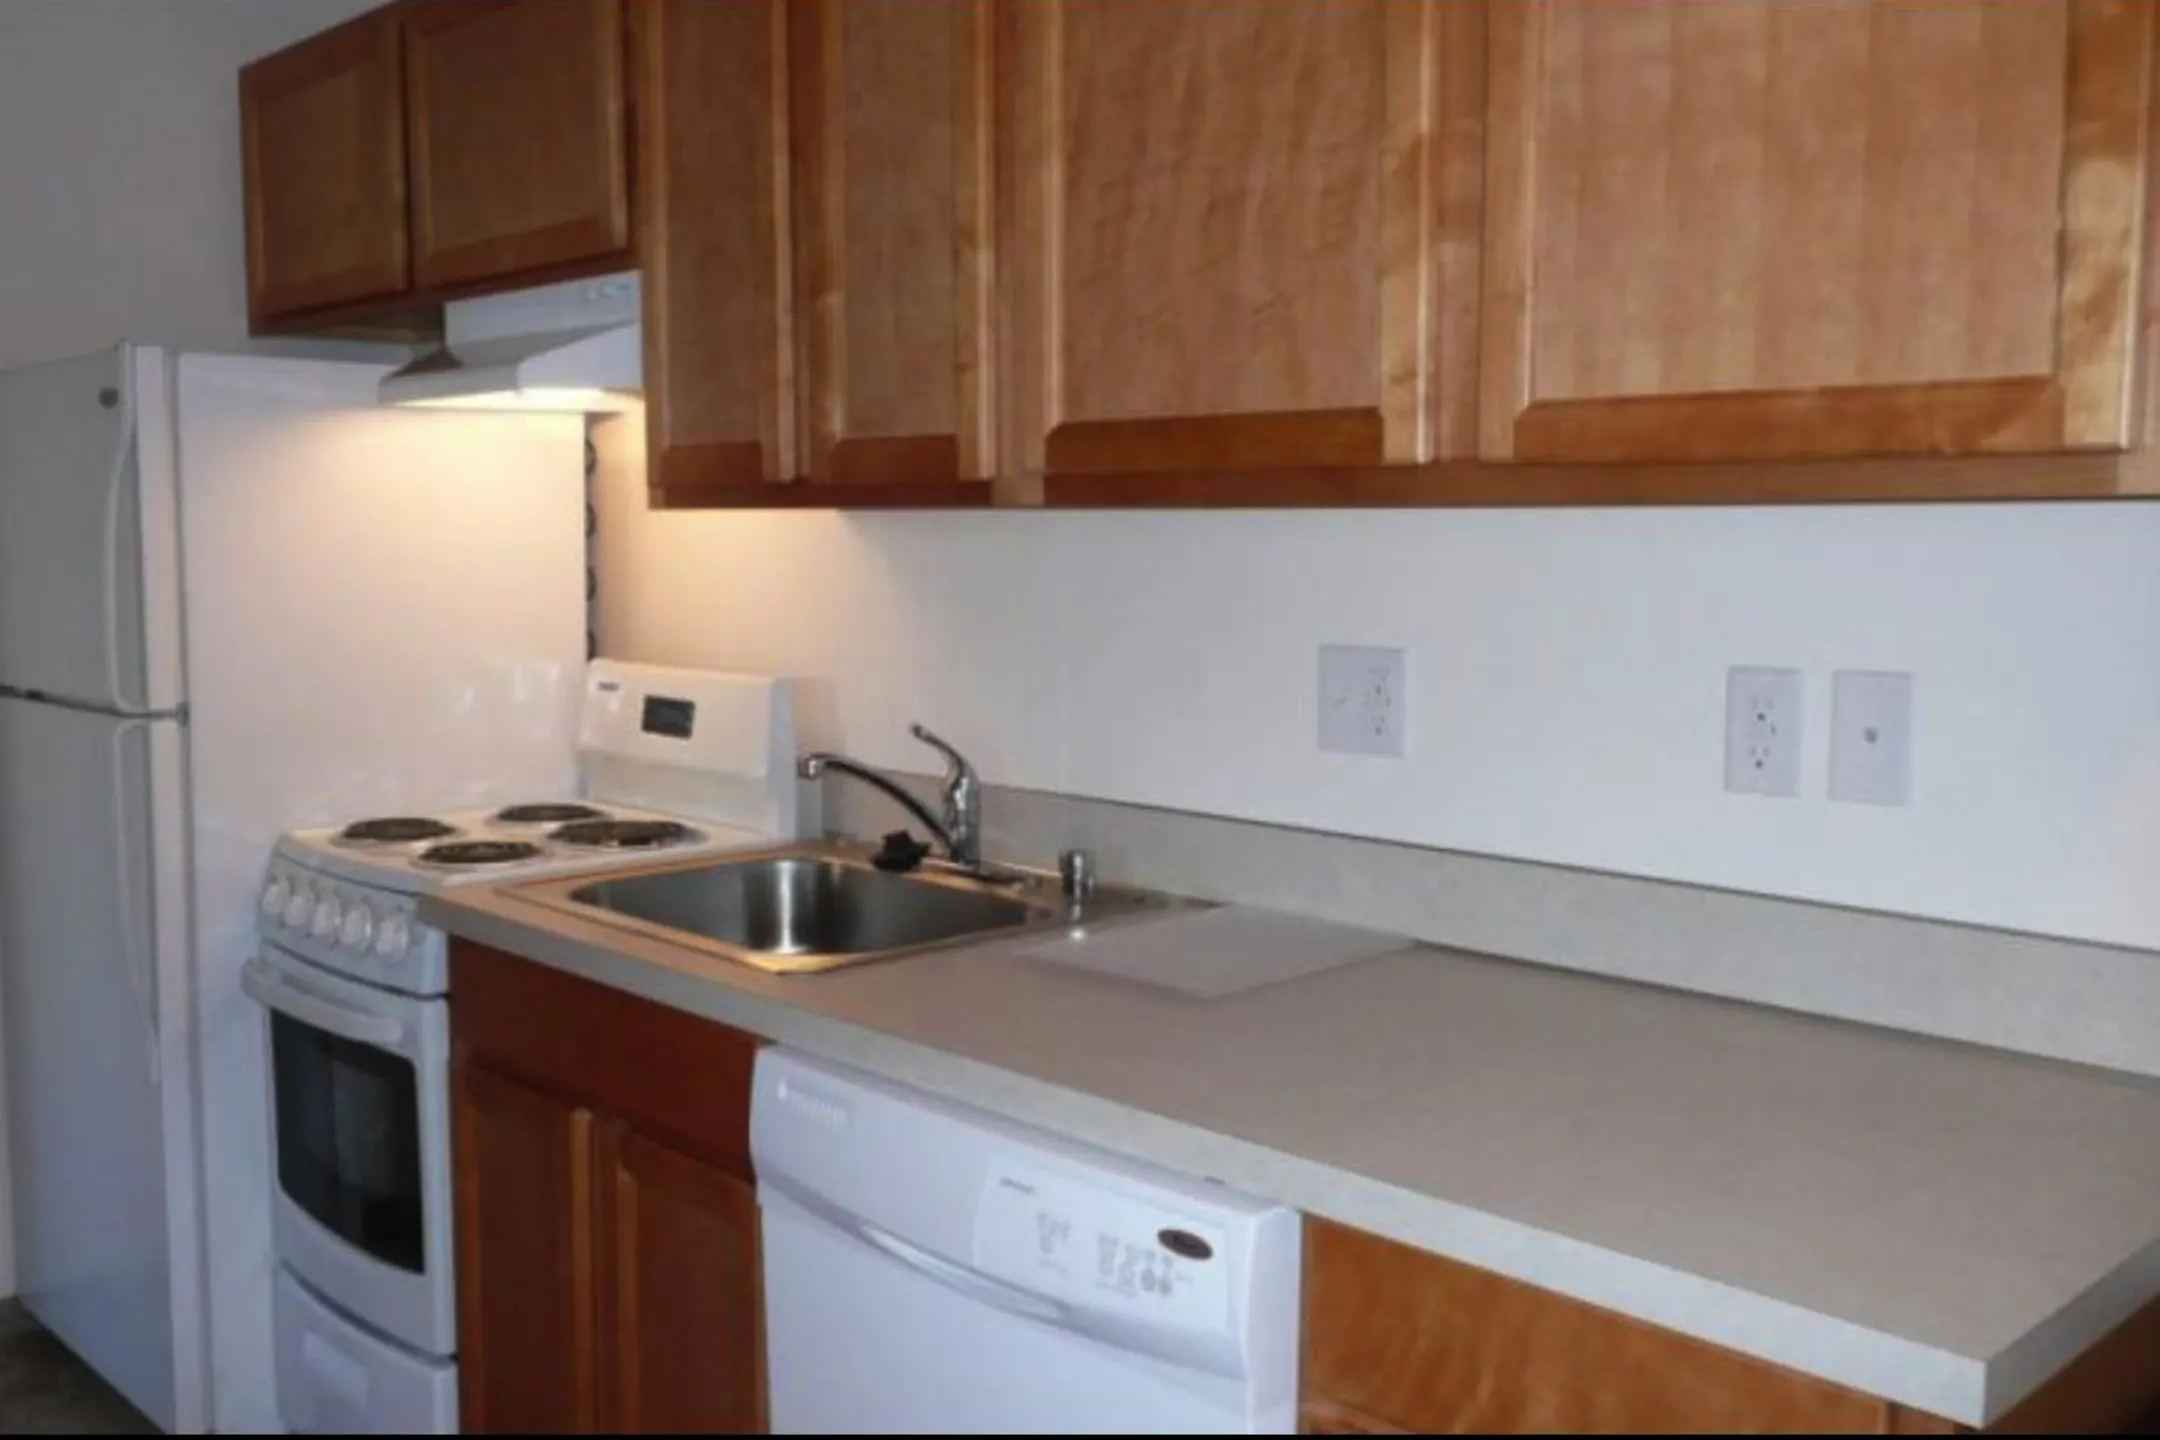 Kitchen - The Village Apartments - Lakewood, WA